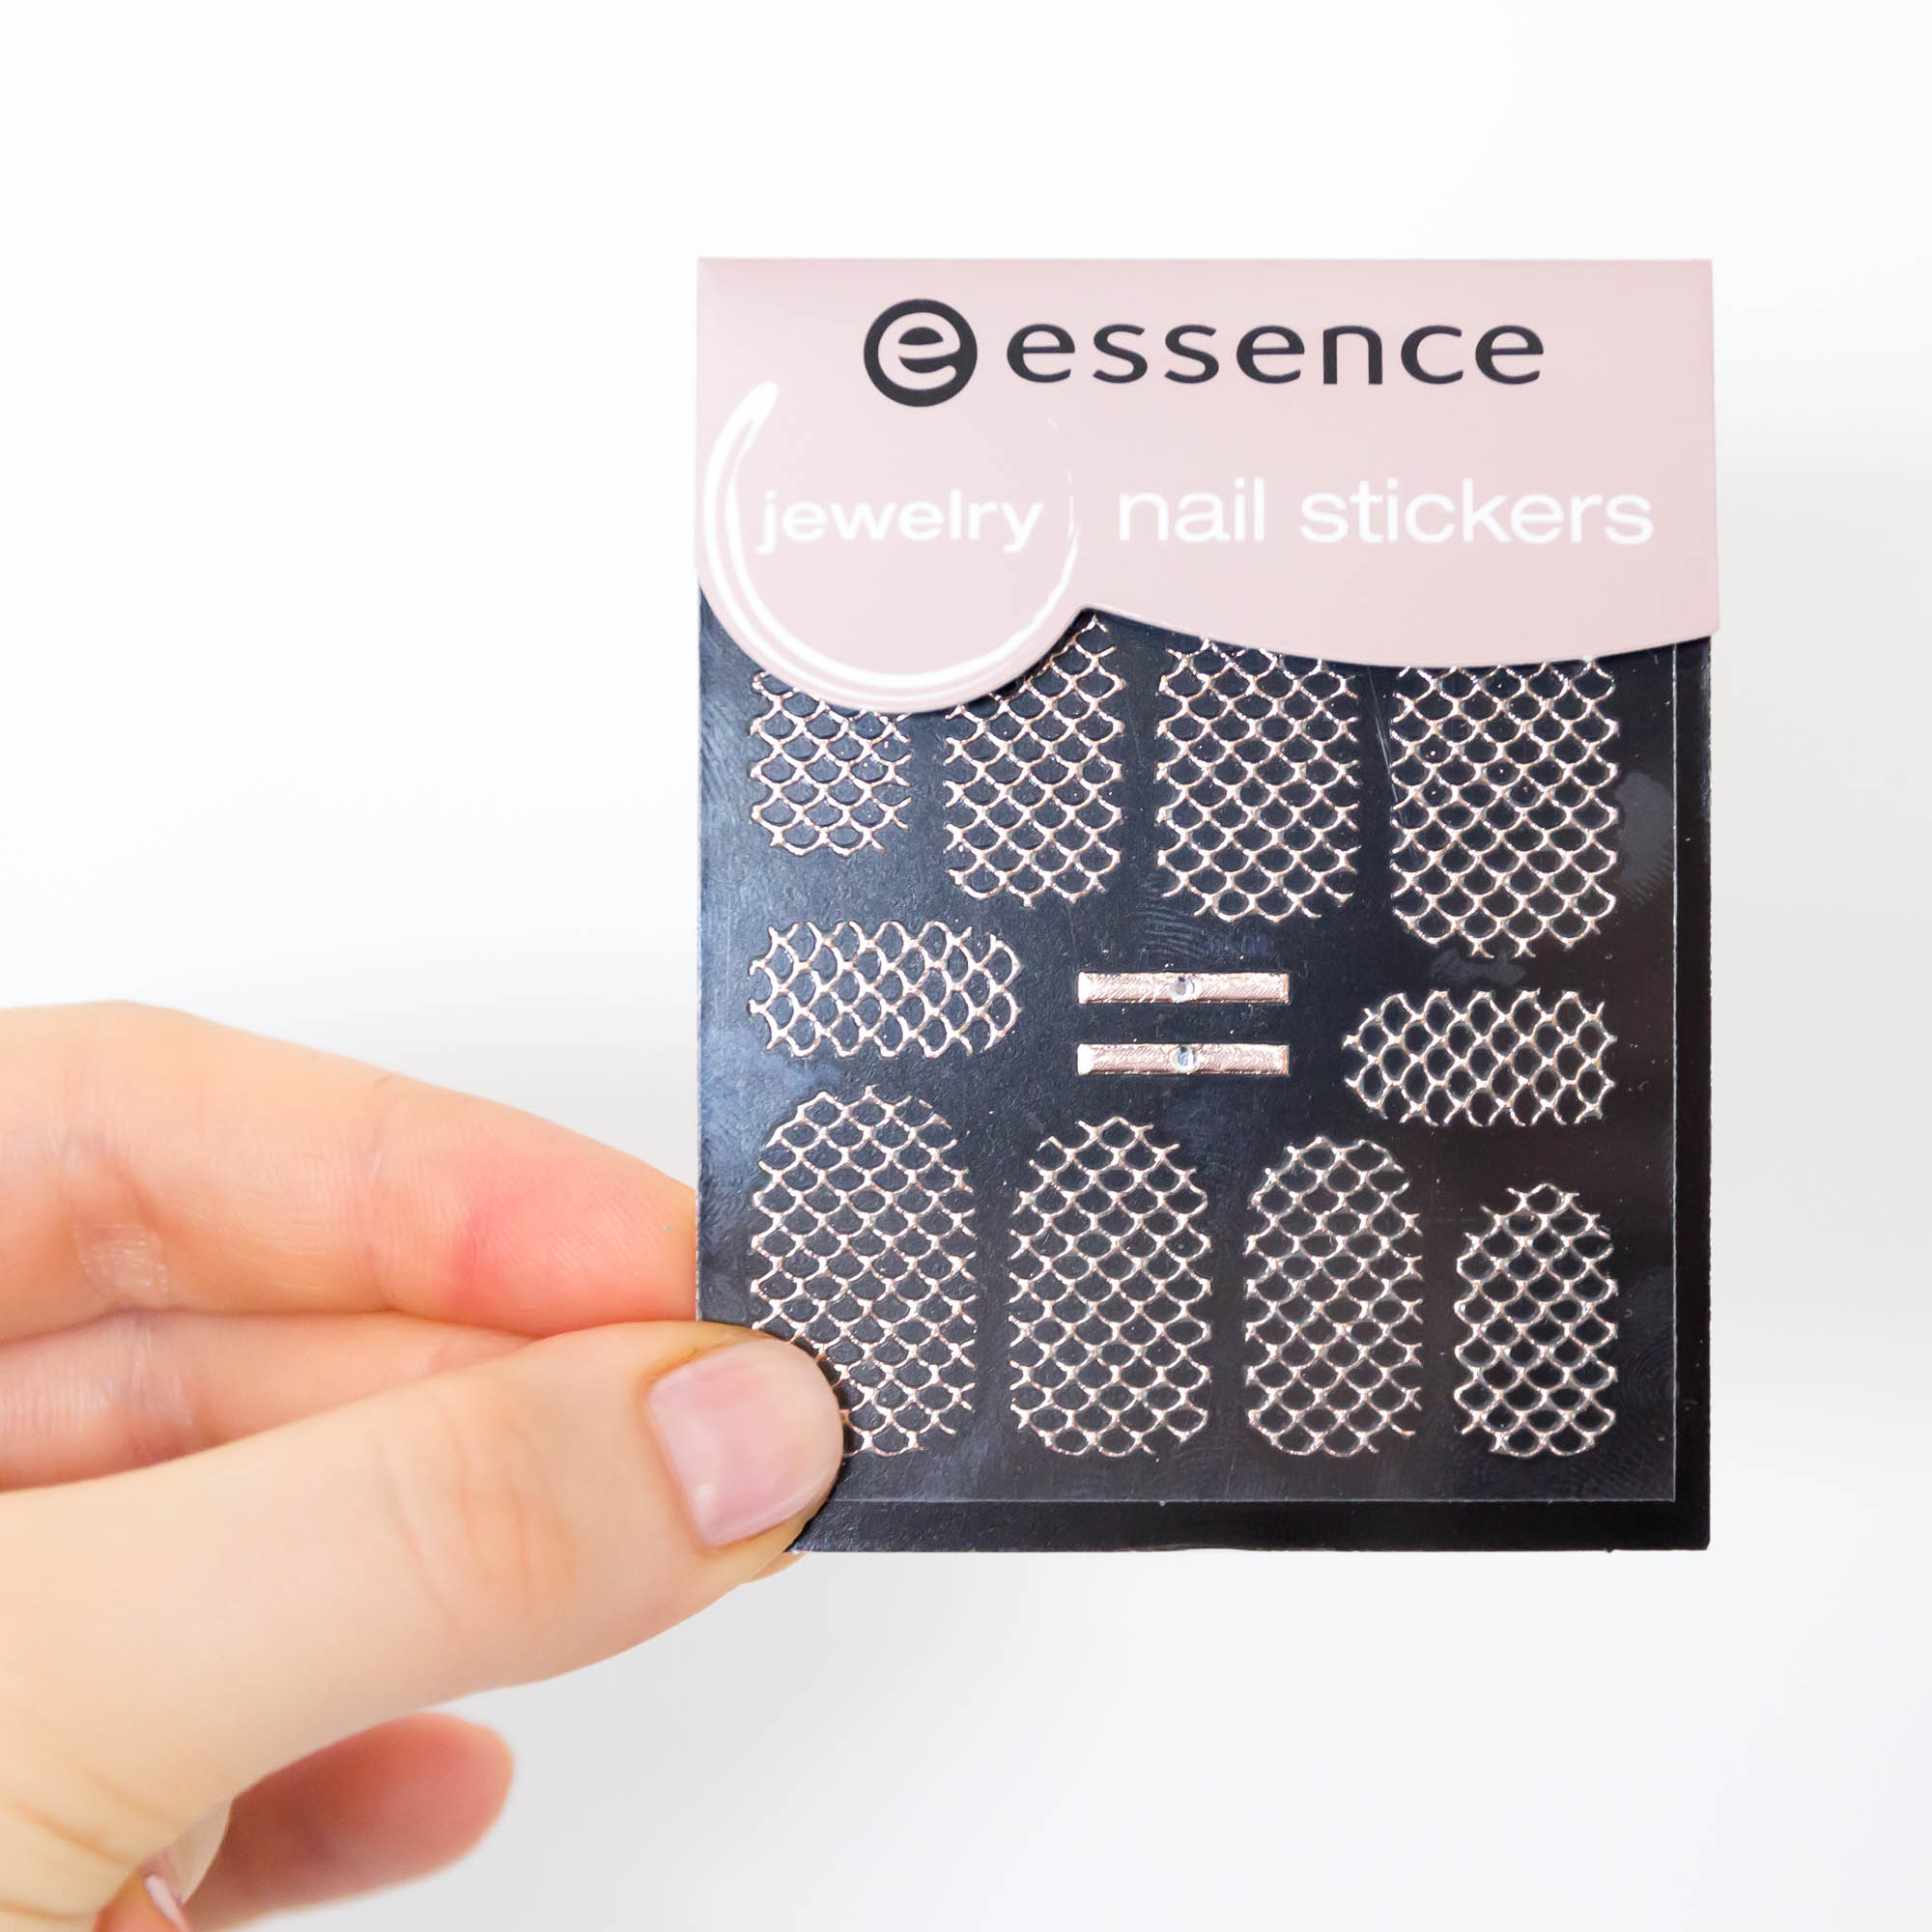 essence cosmetics jewelry nail stickers